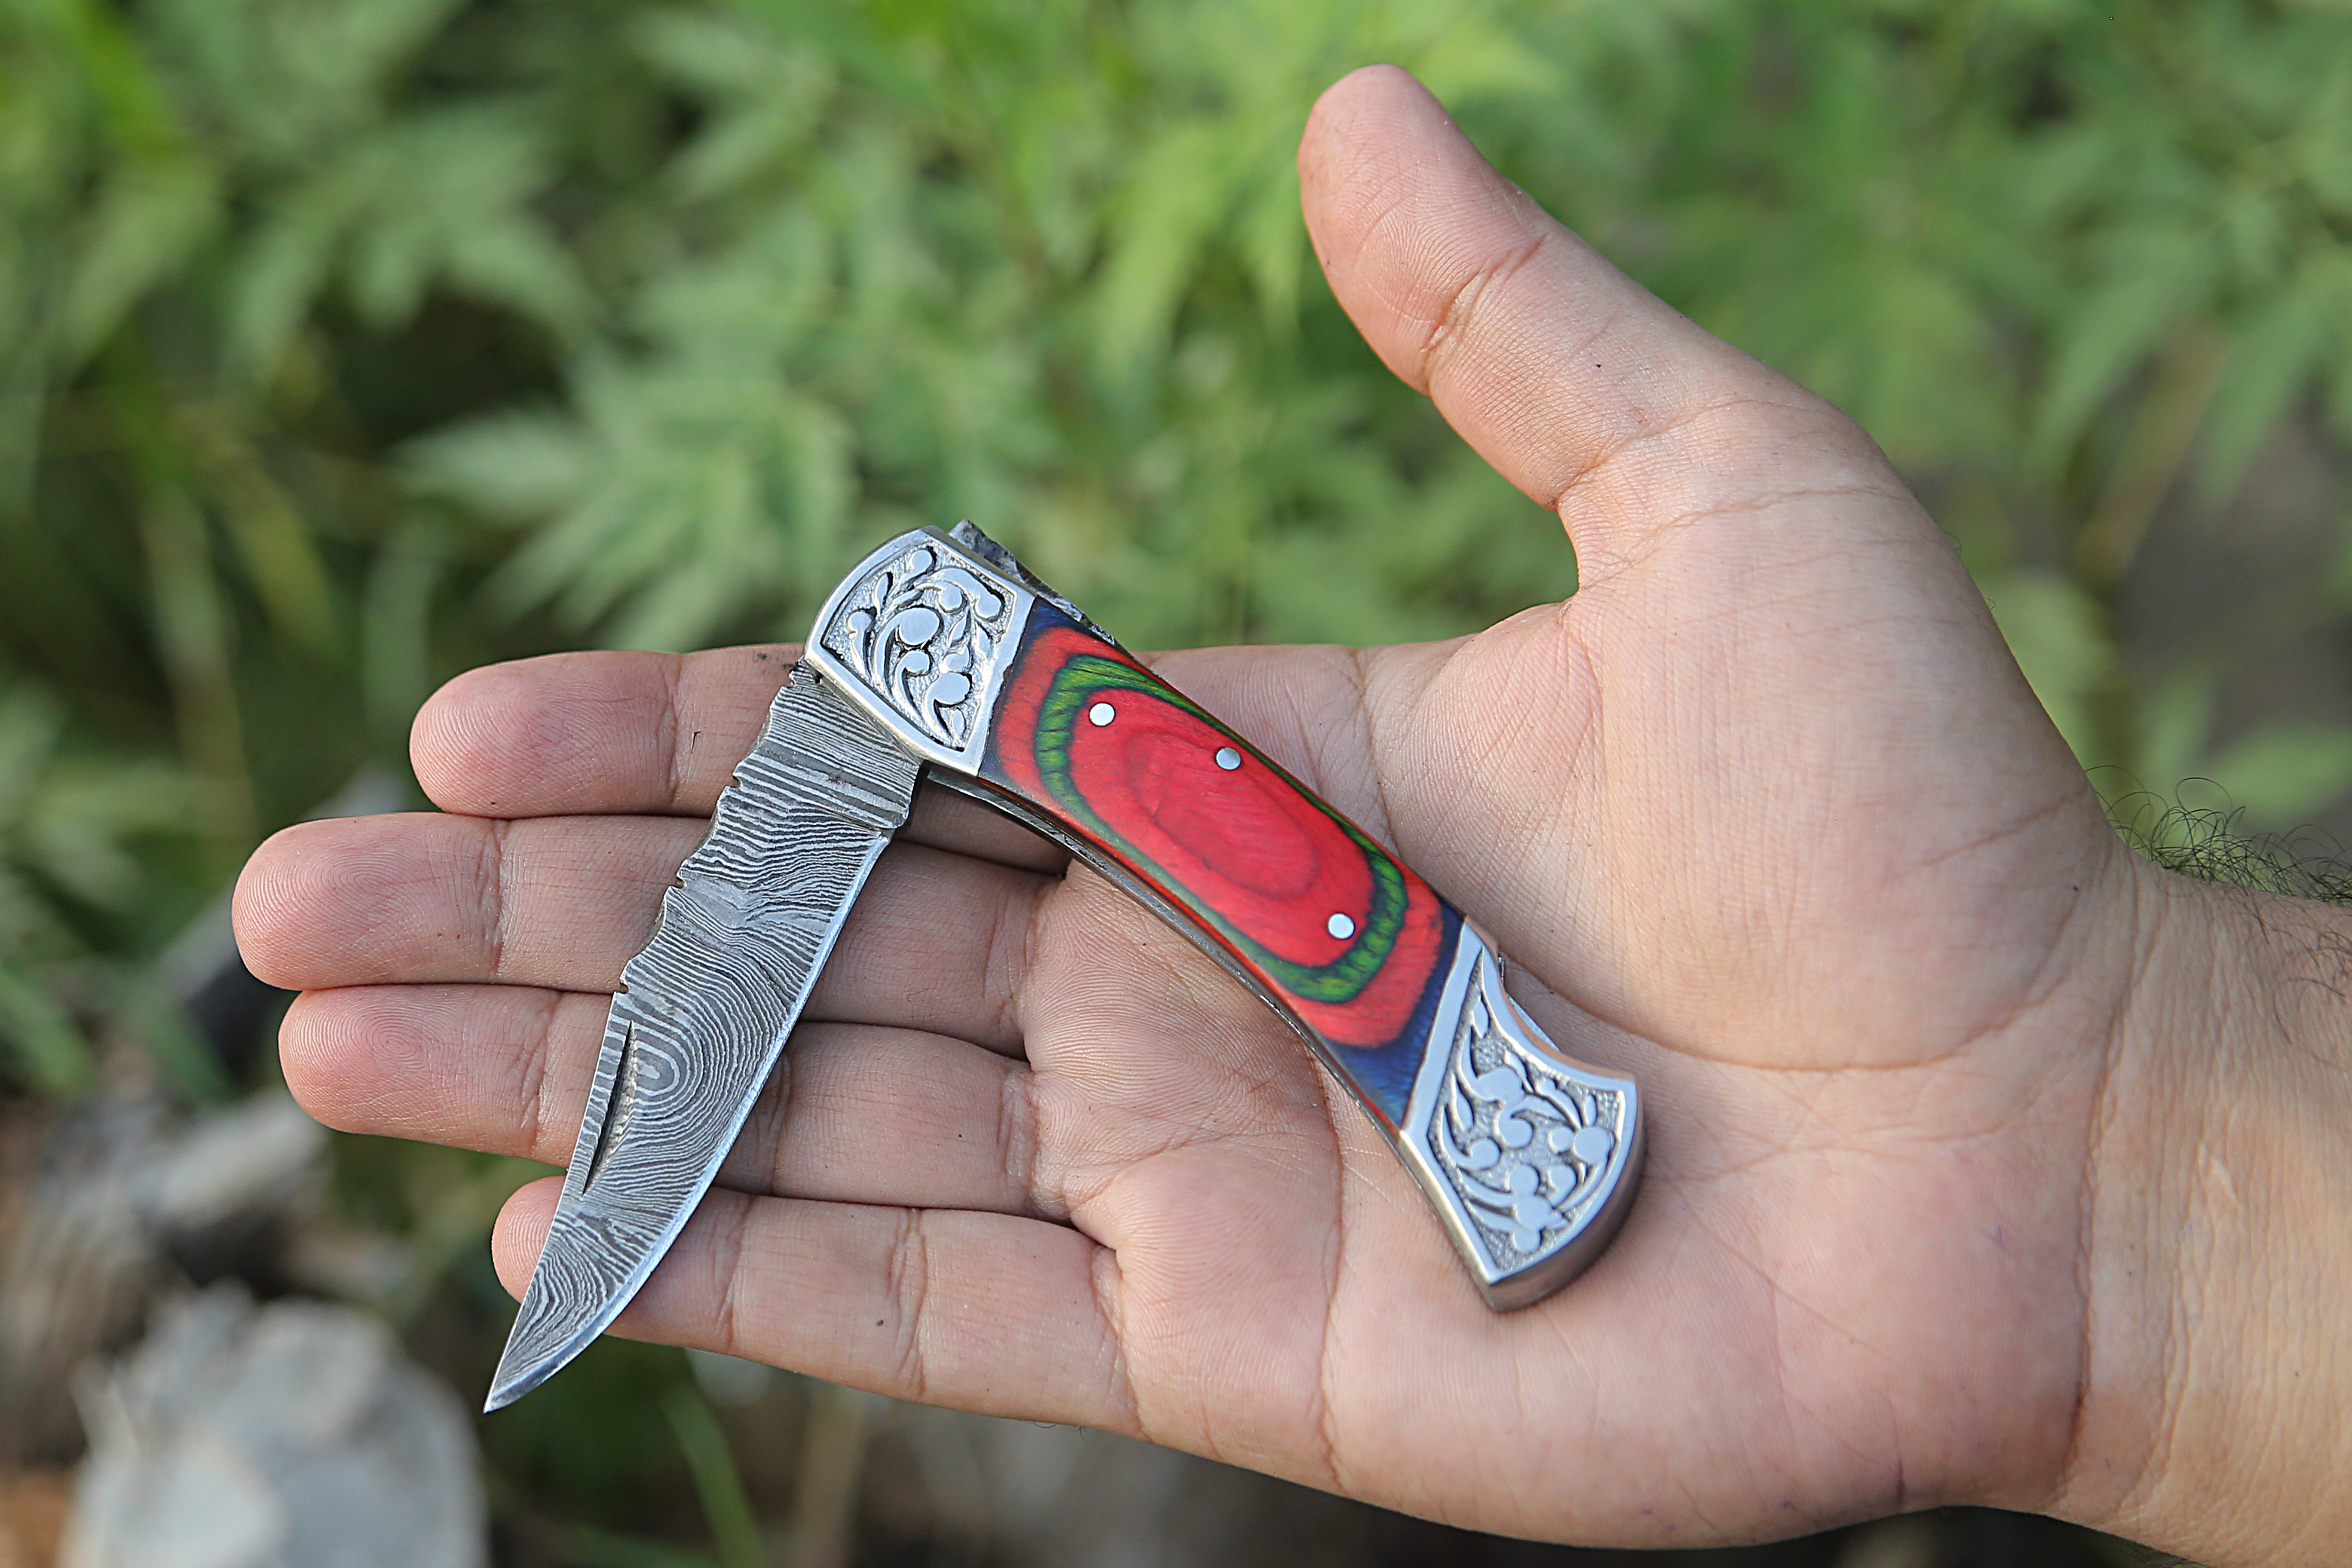 Back Lock Handmade Damascus Steel Pocket Knife Multicolor Pakka Wood Handle Folding Knife With Engraved Steel clips.